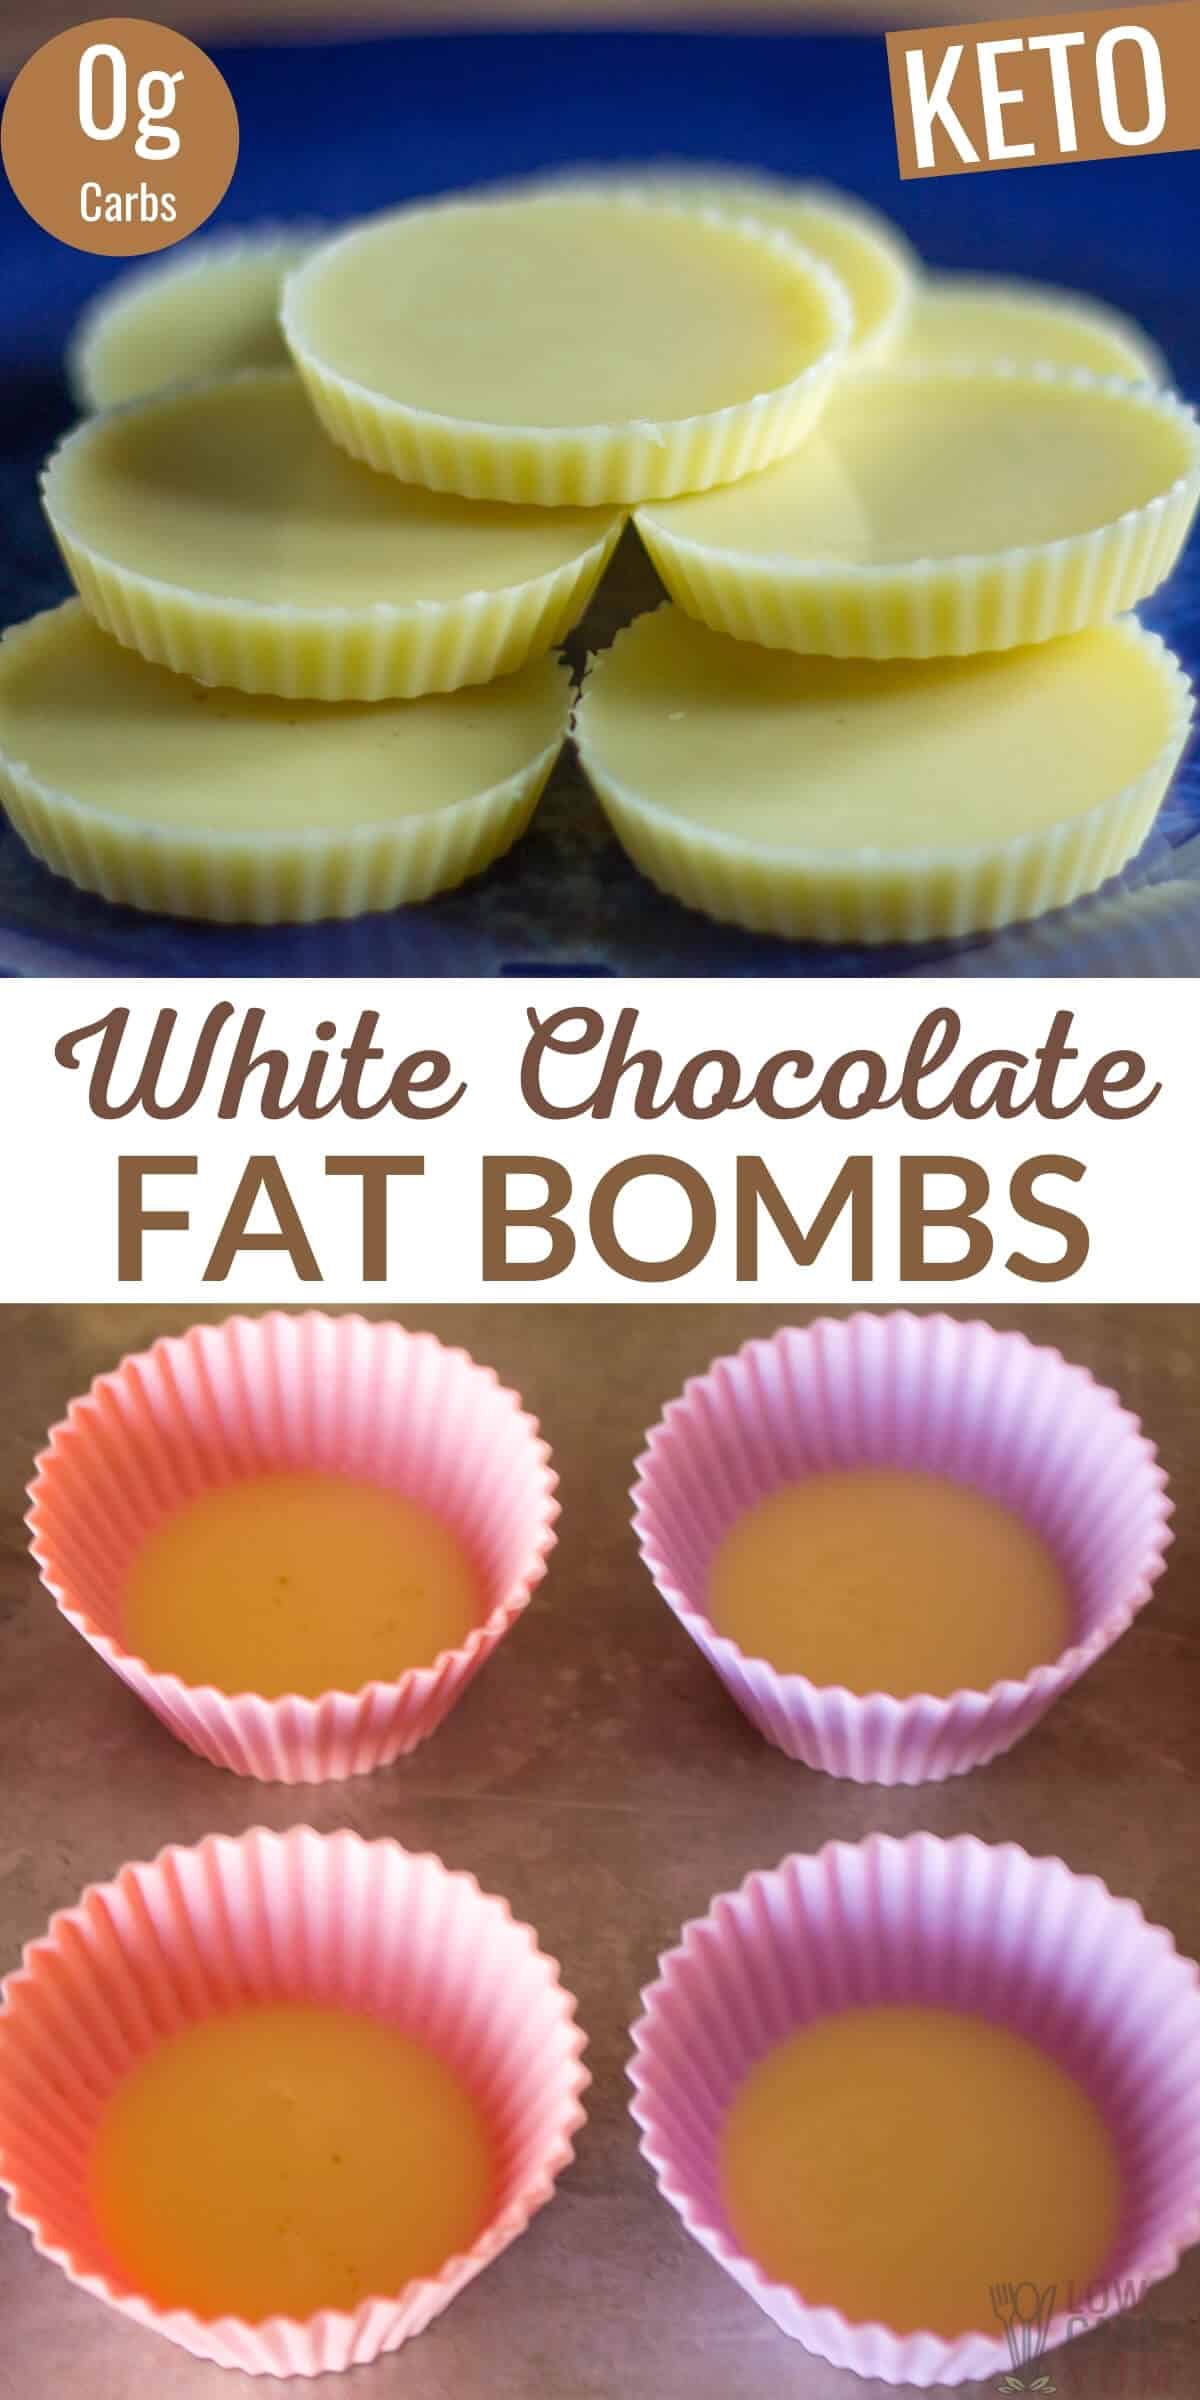 keto white chocolate fat bombs pinterest image